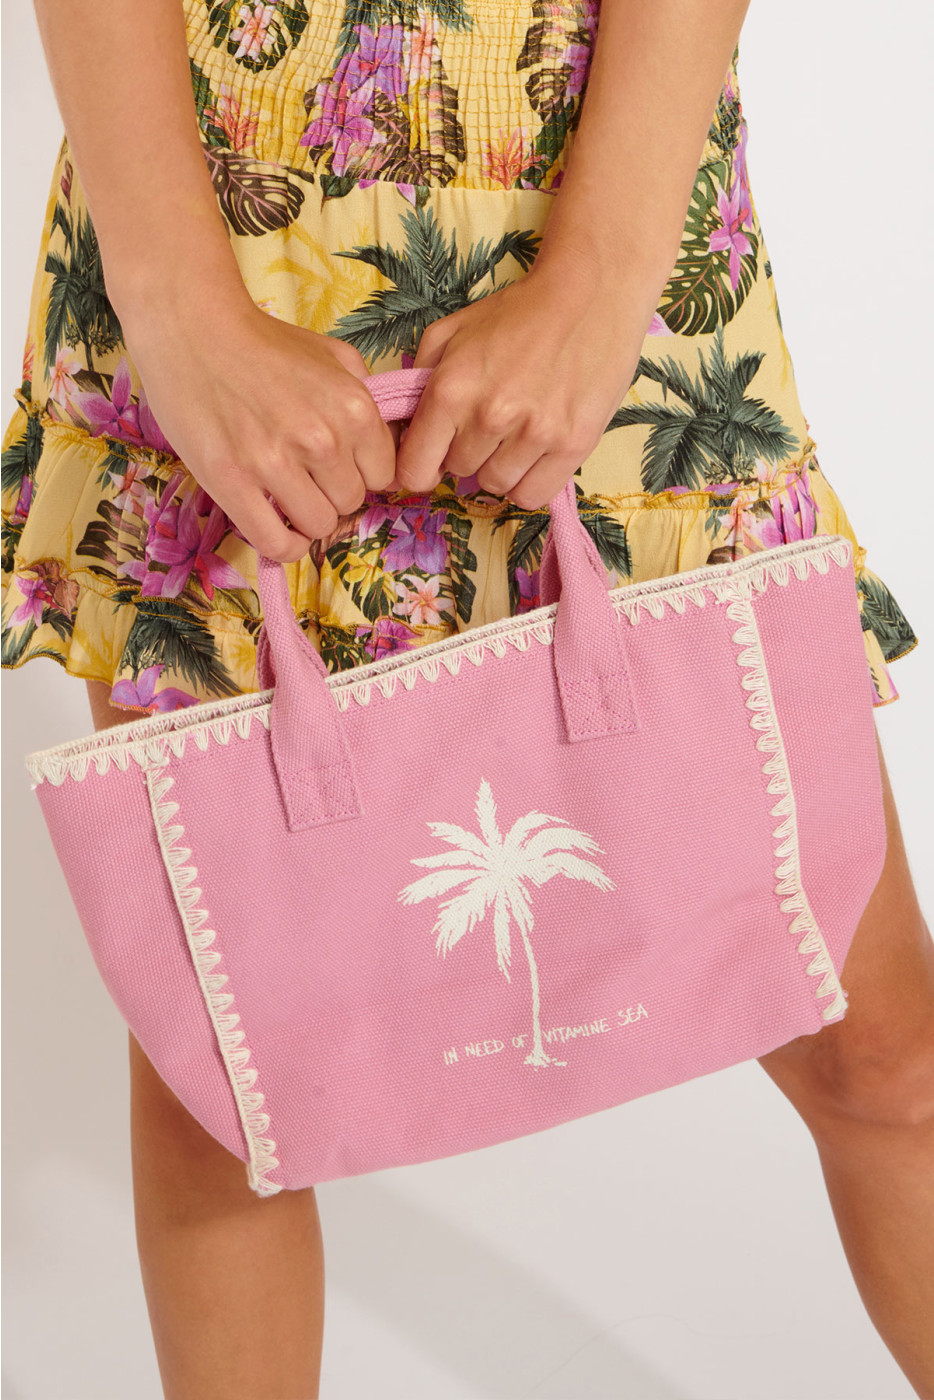 Piccola borsa da spiaggia rosa Ani Lohan